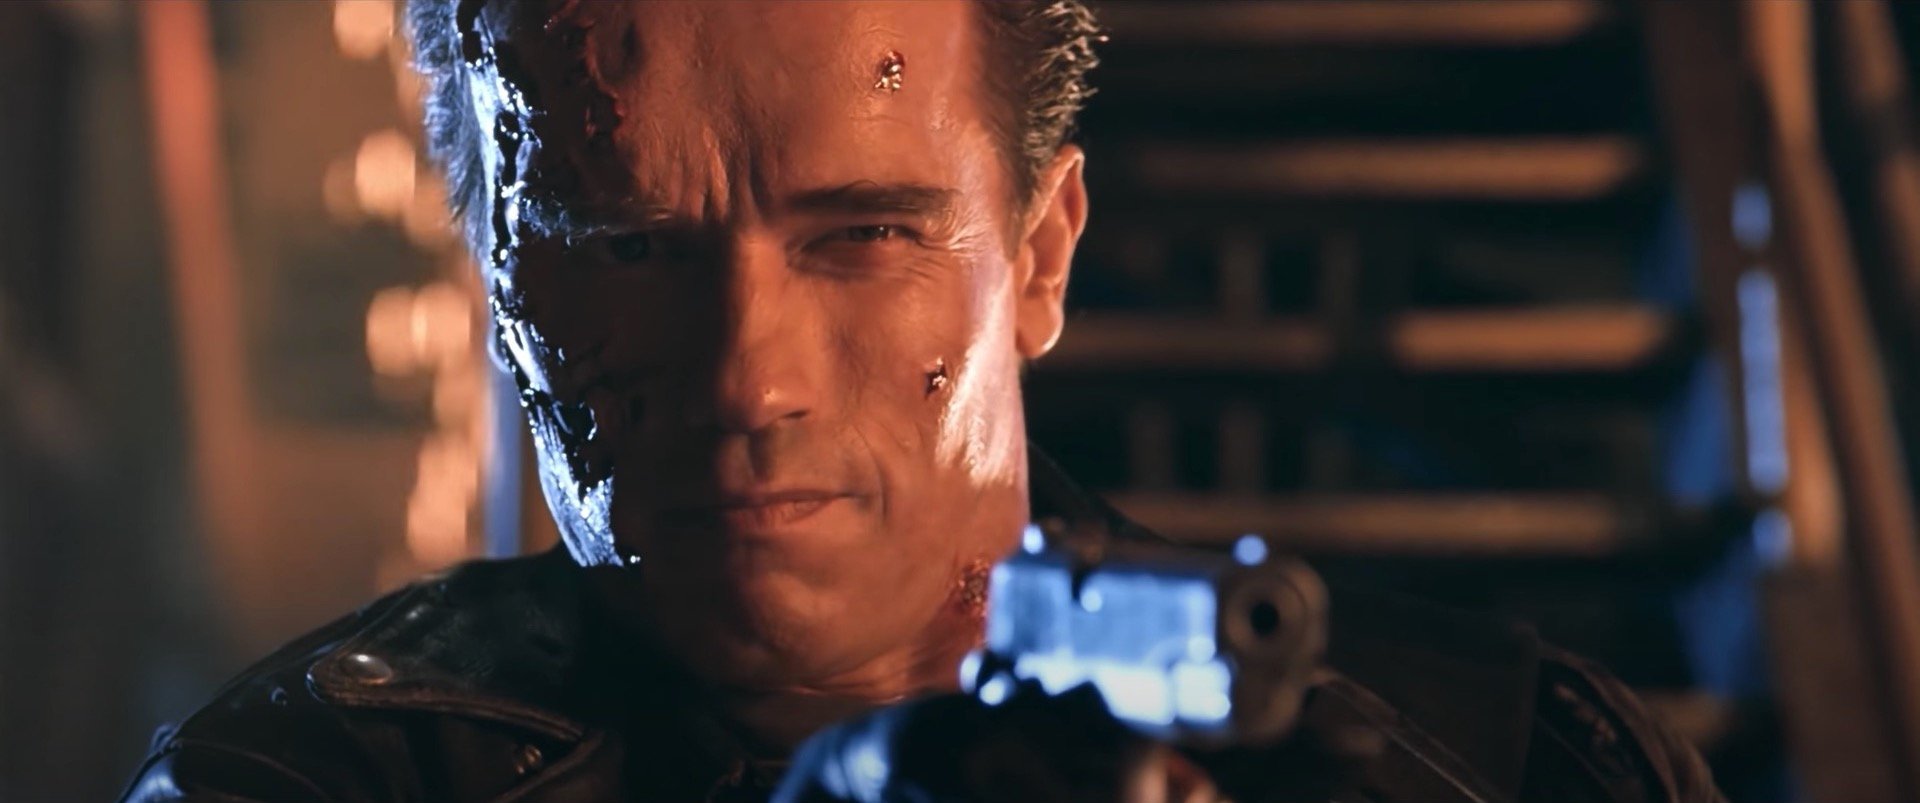 Terminator 2 : le cascadeur d'Arnold Schwarzenegger a vécu "un enfer" pendant le tournage